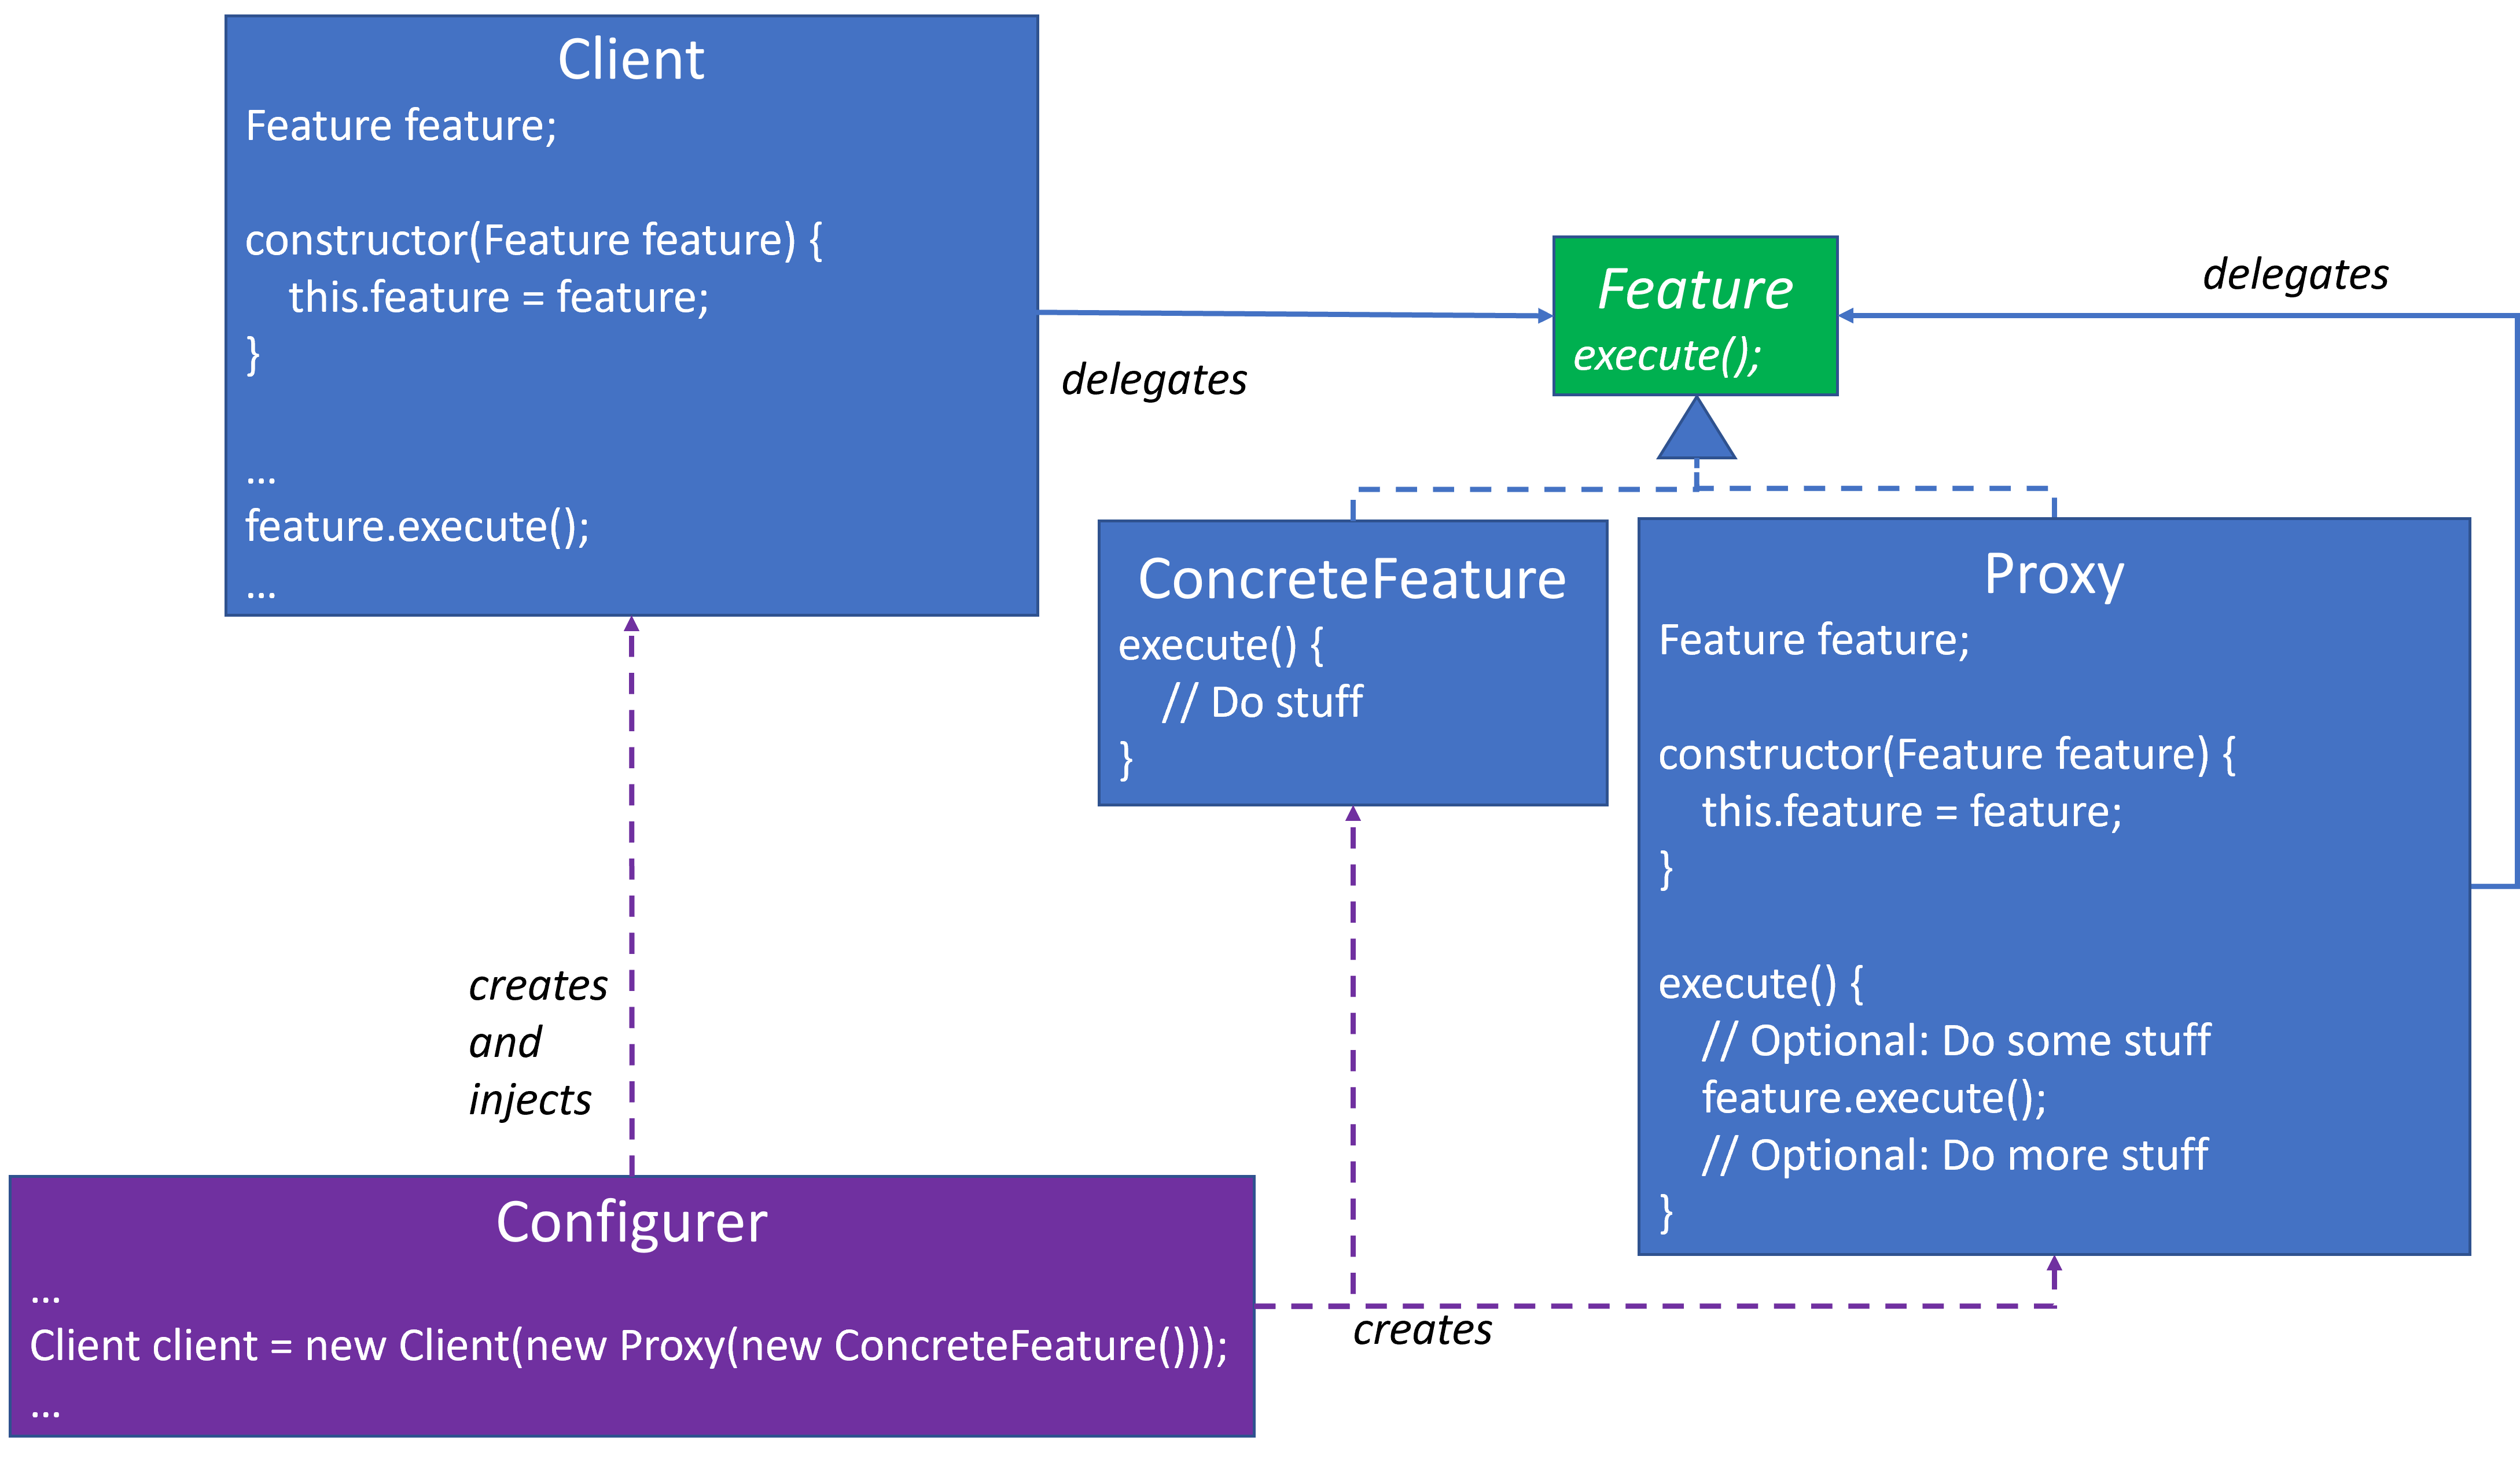 Proxy via with my UML diagram